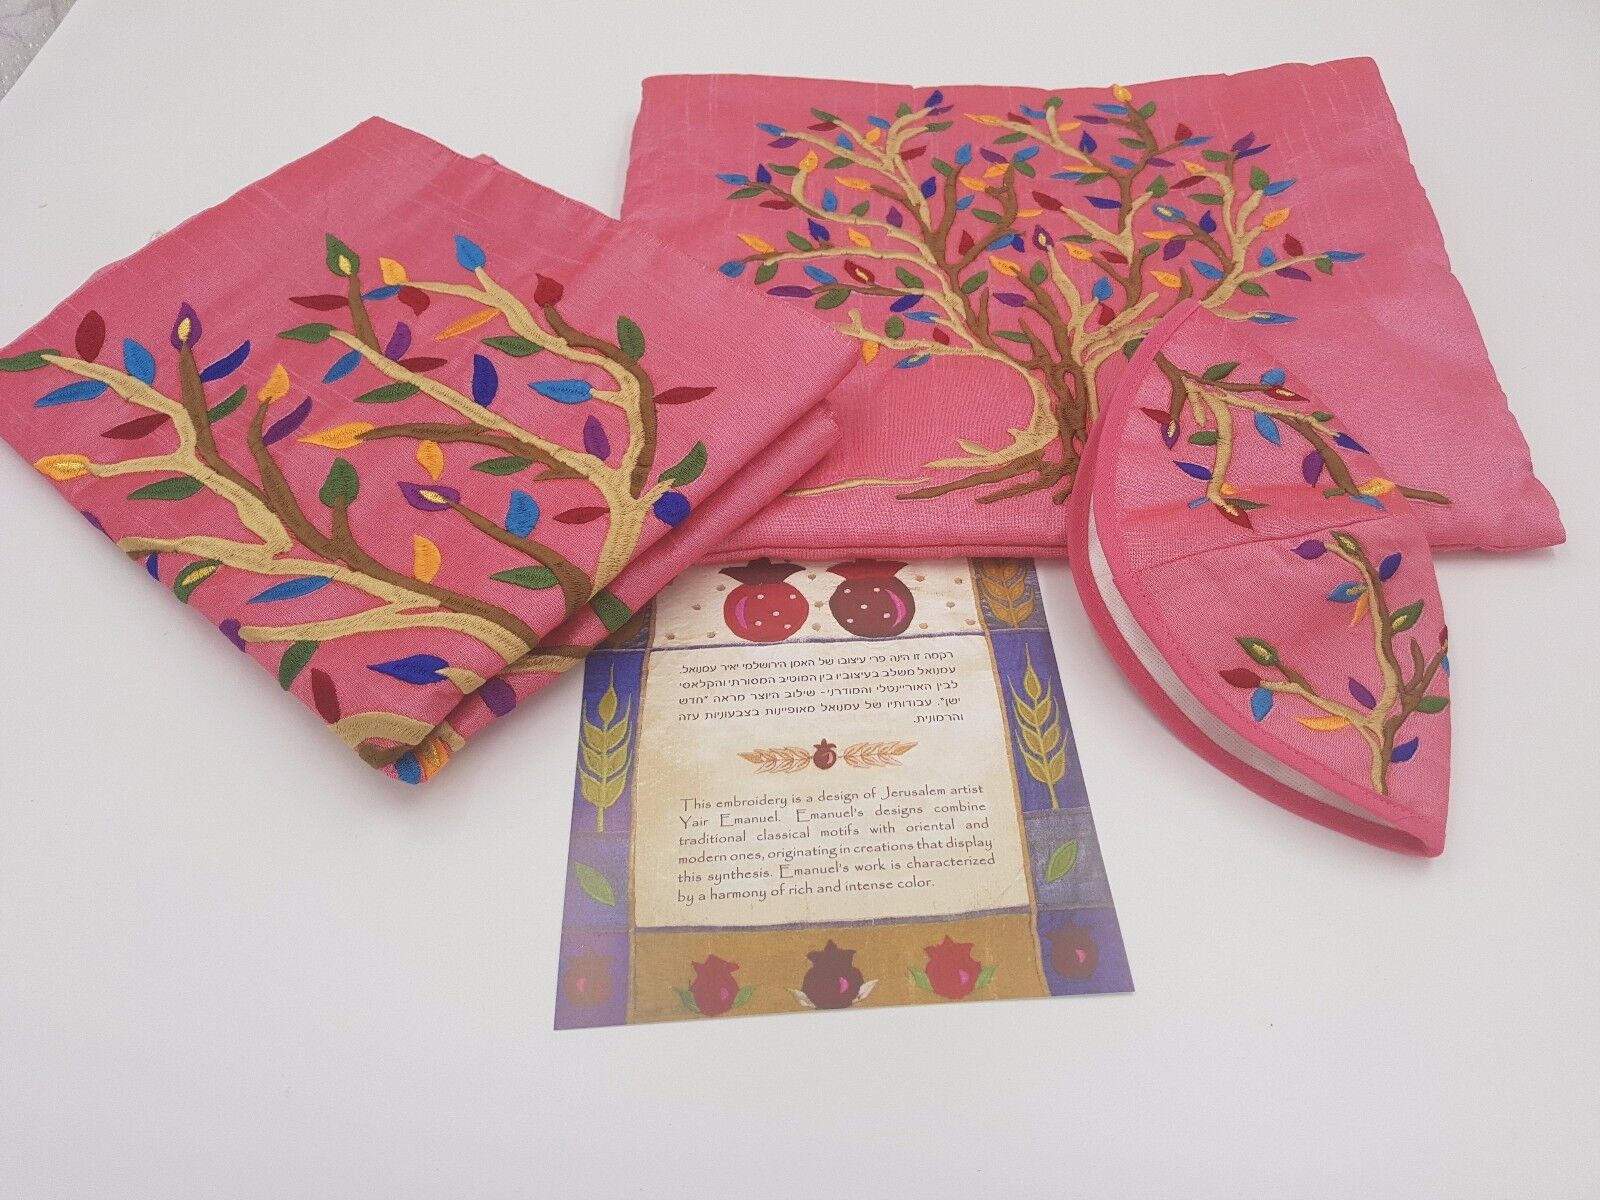 Set Tallit + kippah + bag Embroidered Silk Yair Emanuel Women Tree of life Pink